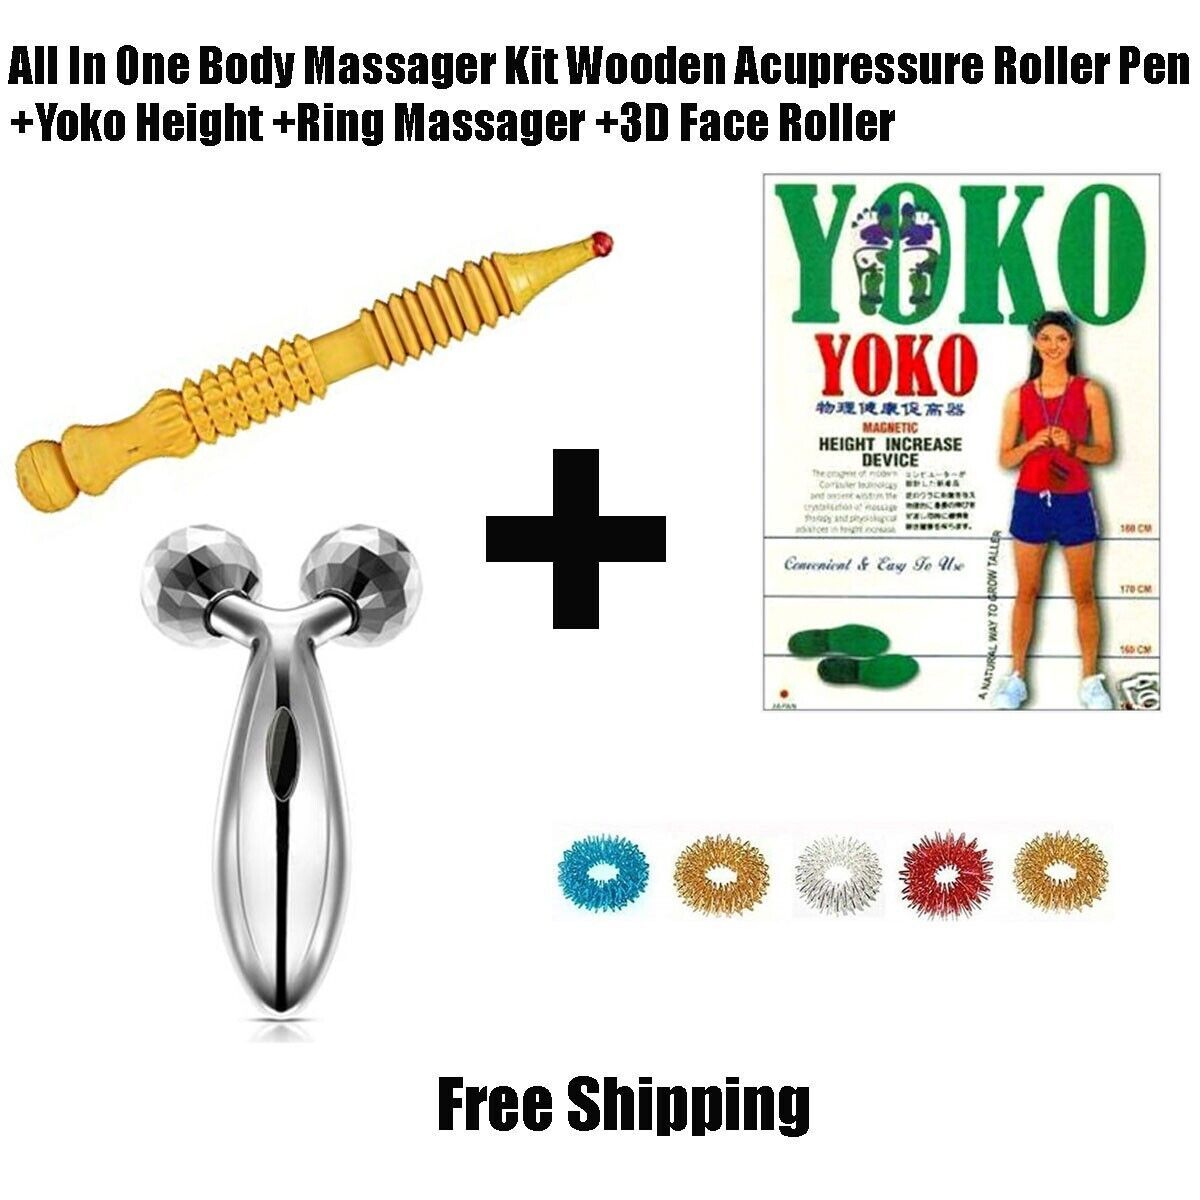 Body Massager Kit Wooden Acupressure +Yoko Height +Ring Massager +3D Face Roller - $86.94